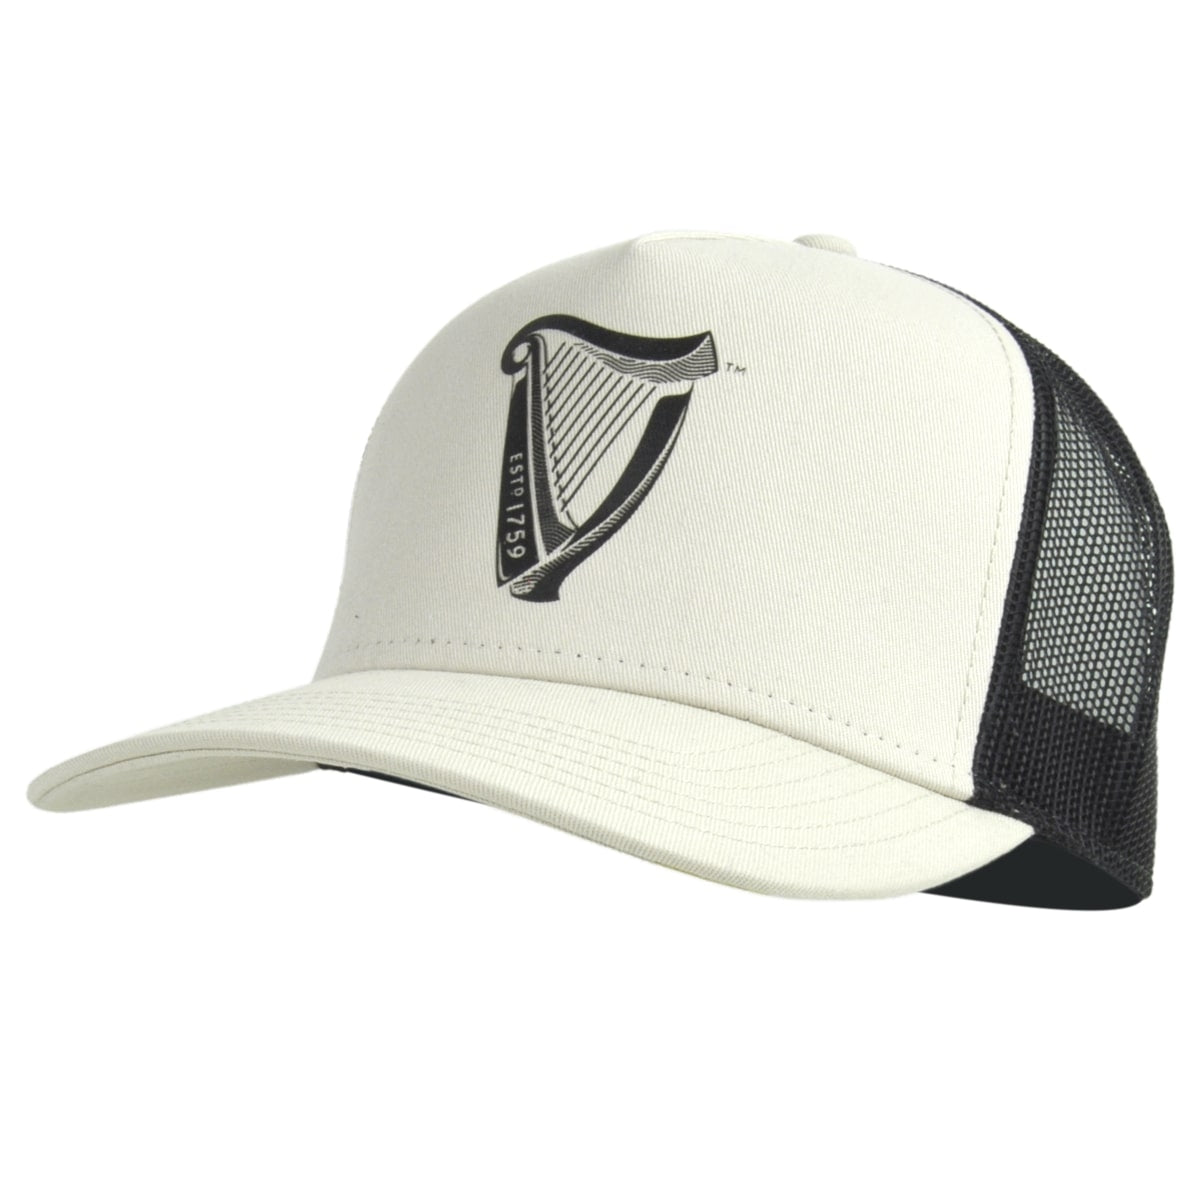 A Guinness Premium Beige & Black Harp Hat.